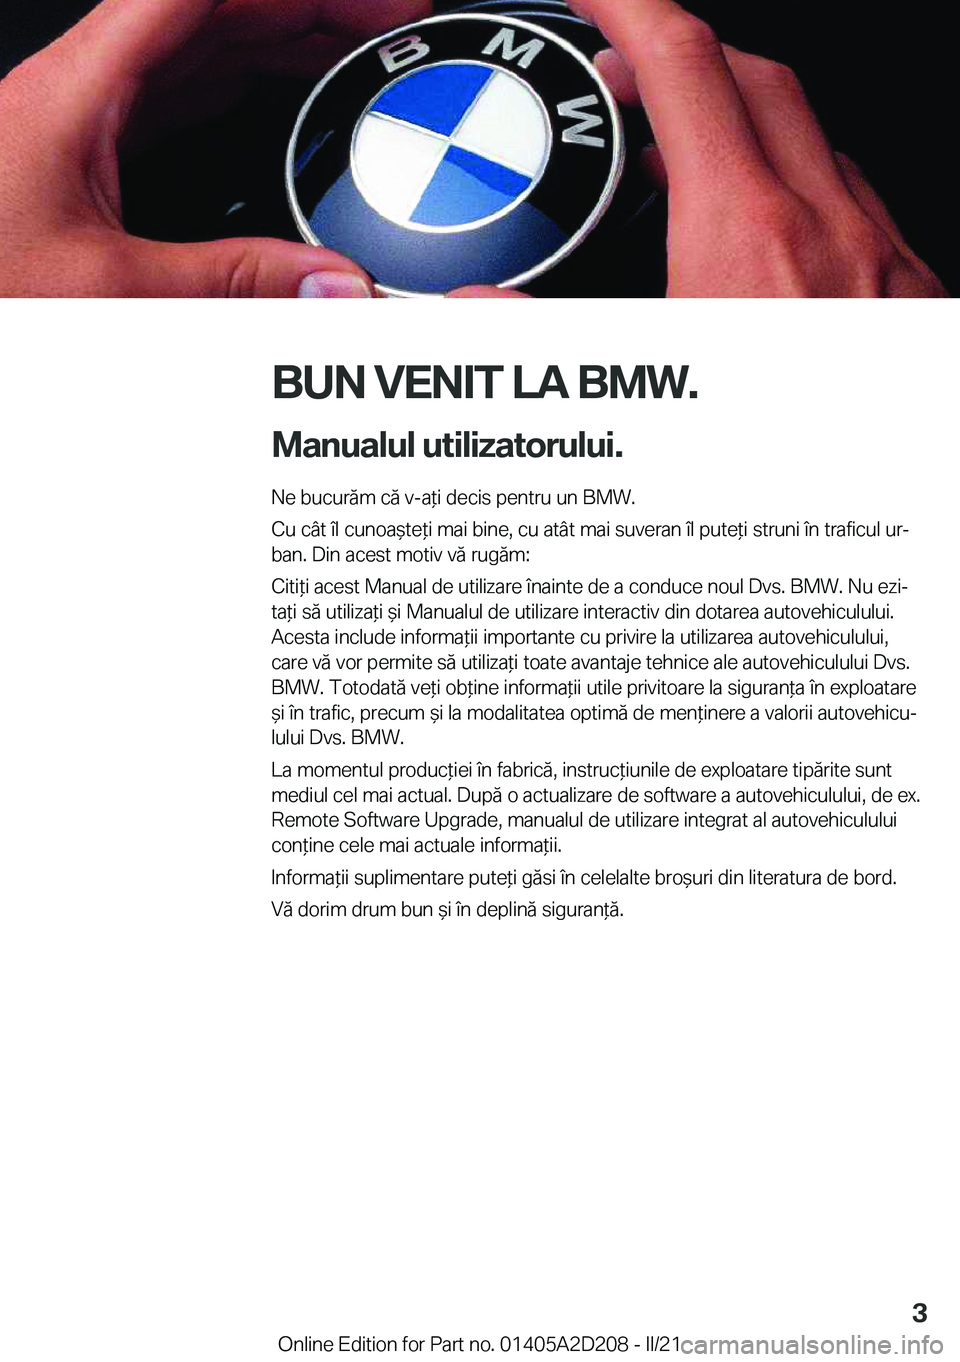 BMW X6 M 2021  Ghiduri De Utilizare (in Romanian) �B�U�N��V�E�N�I�T��L�A��B�M�W�.�M�a�n�u�a�l�u�l��u�t�i�l�i�z�a�t�o�r�u�l�u�i�.
�N�e��b�u�c�u�r�ă�m��c�ă��v�-�a*�i��d�e�c�i�s��p�e�n�t�r�u��u�n��B�M�W�.
�C�u��c�